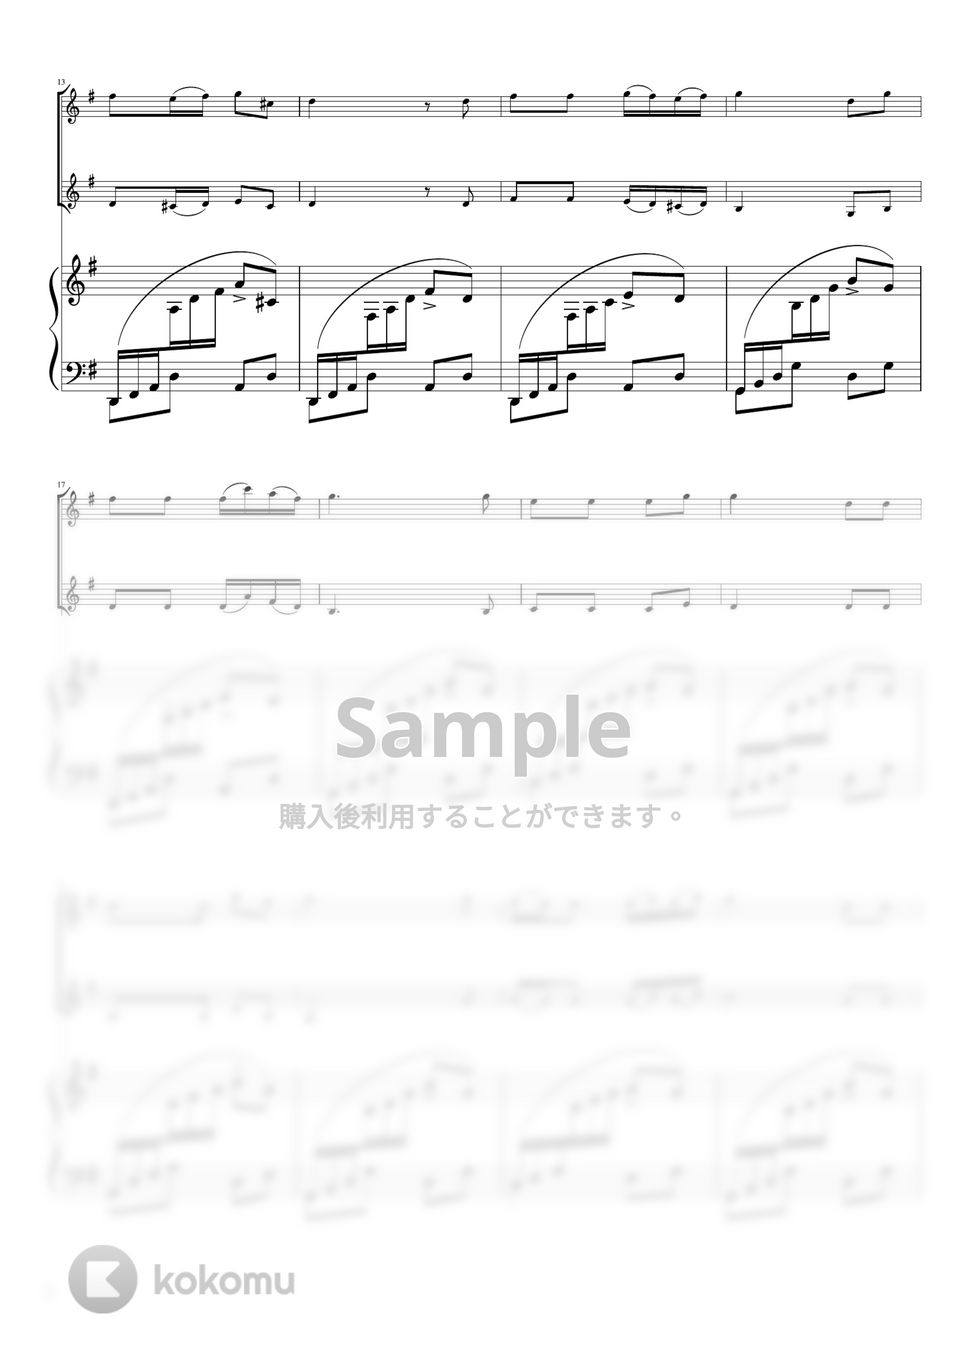 F.シューベルト - 鱒 (G・ピアノトリオ/バイオリン・フルート) by pfkaori